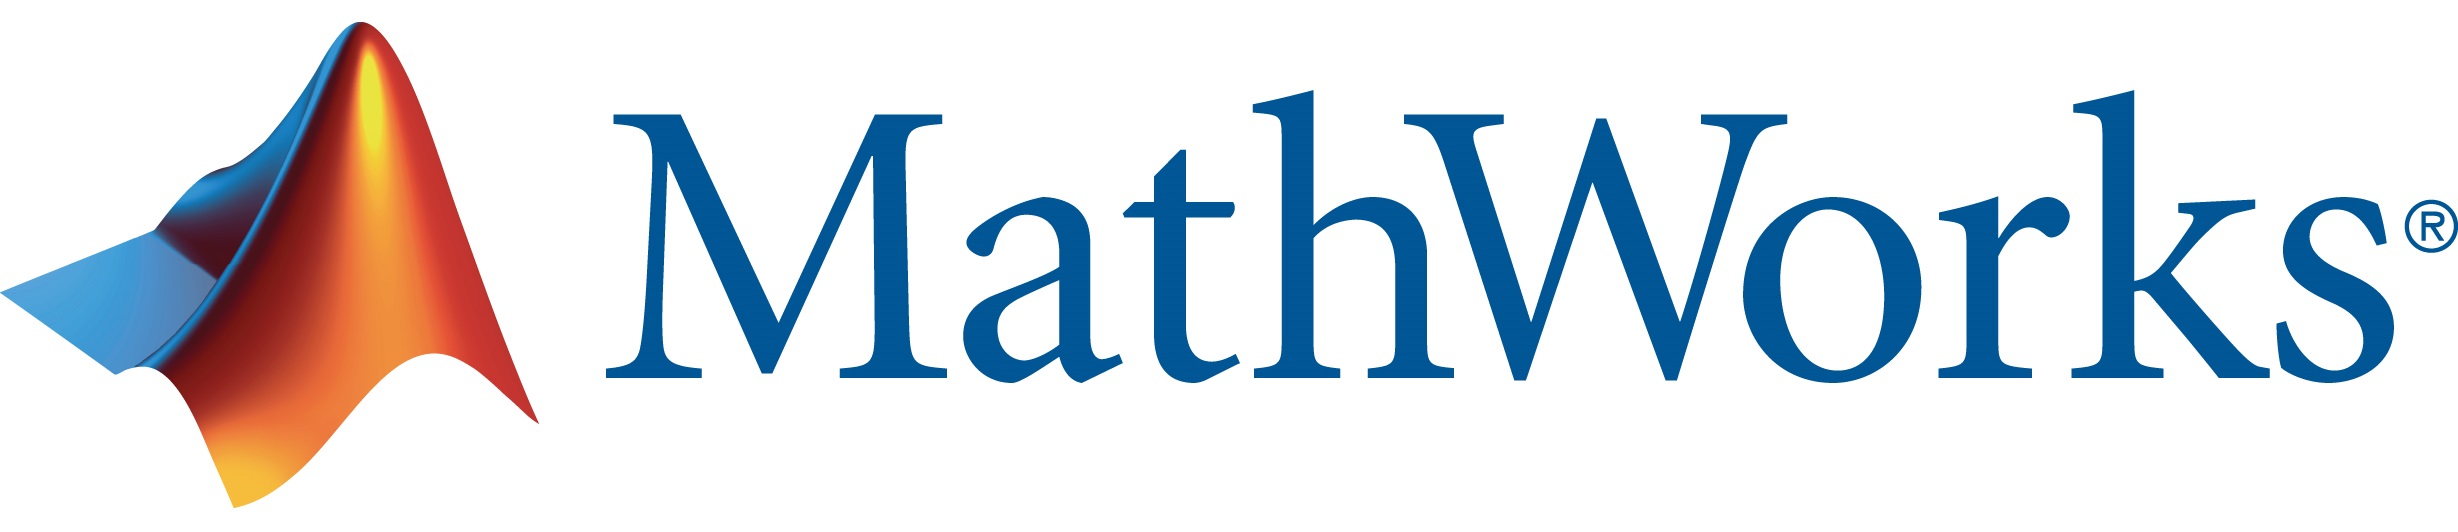 sponsor-mathworks